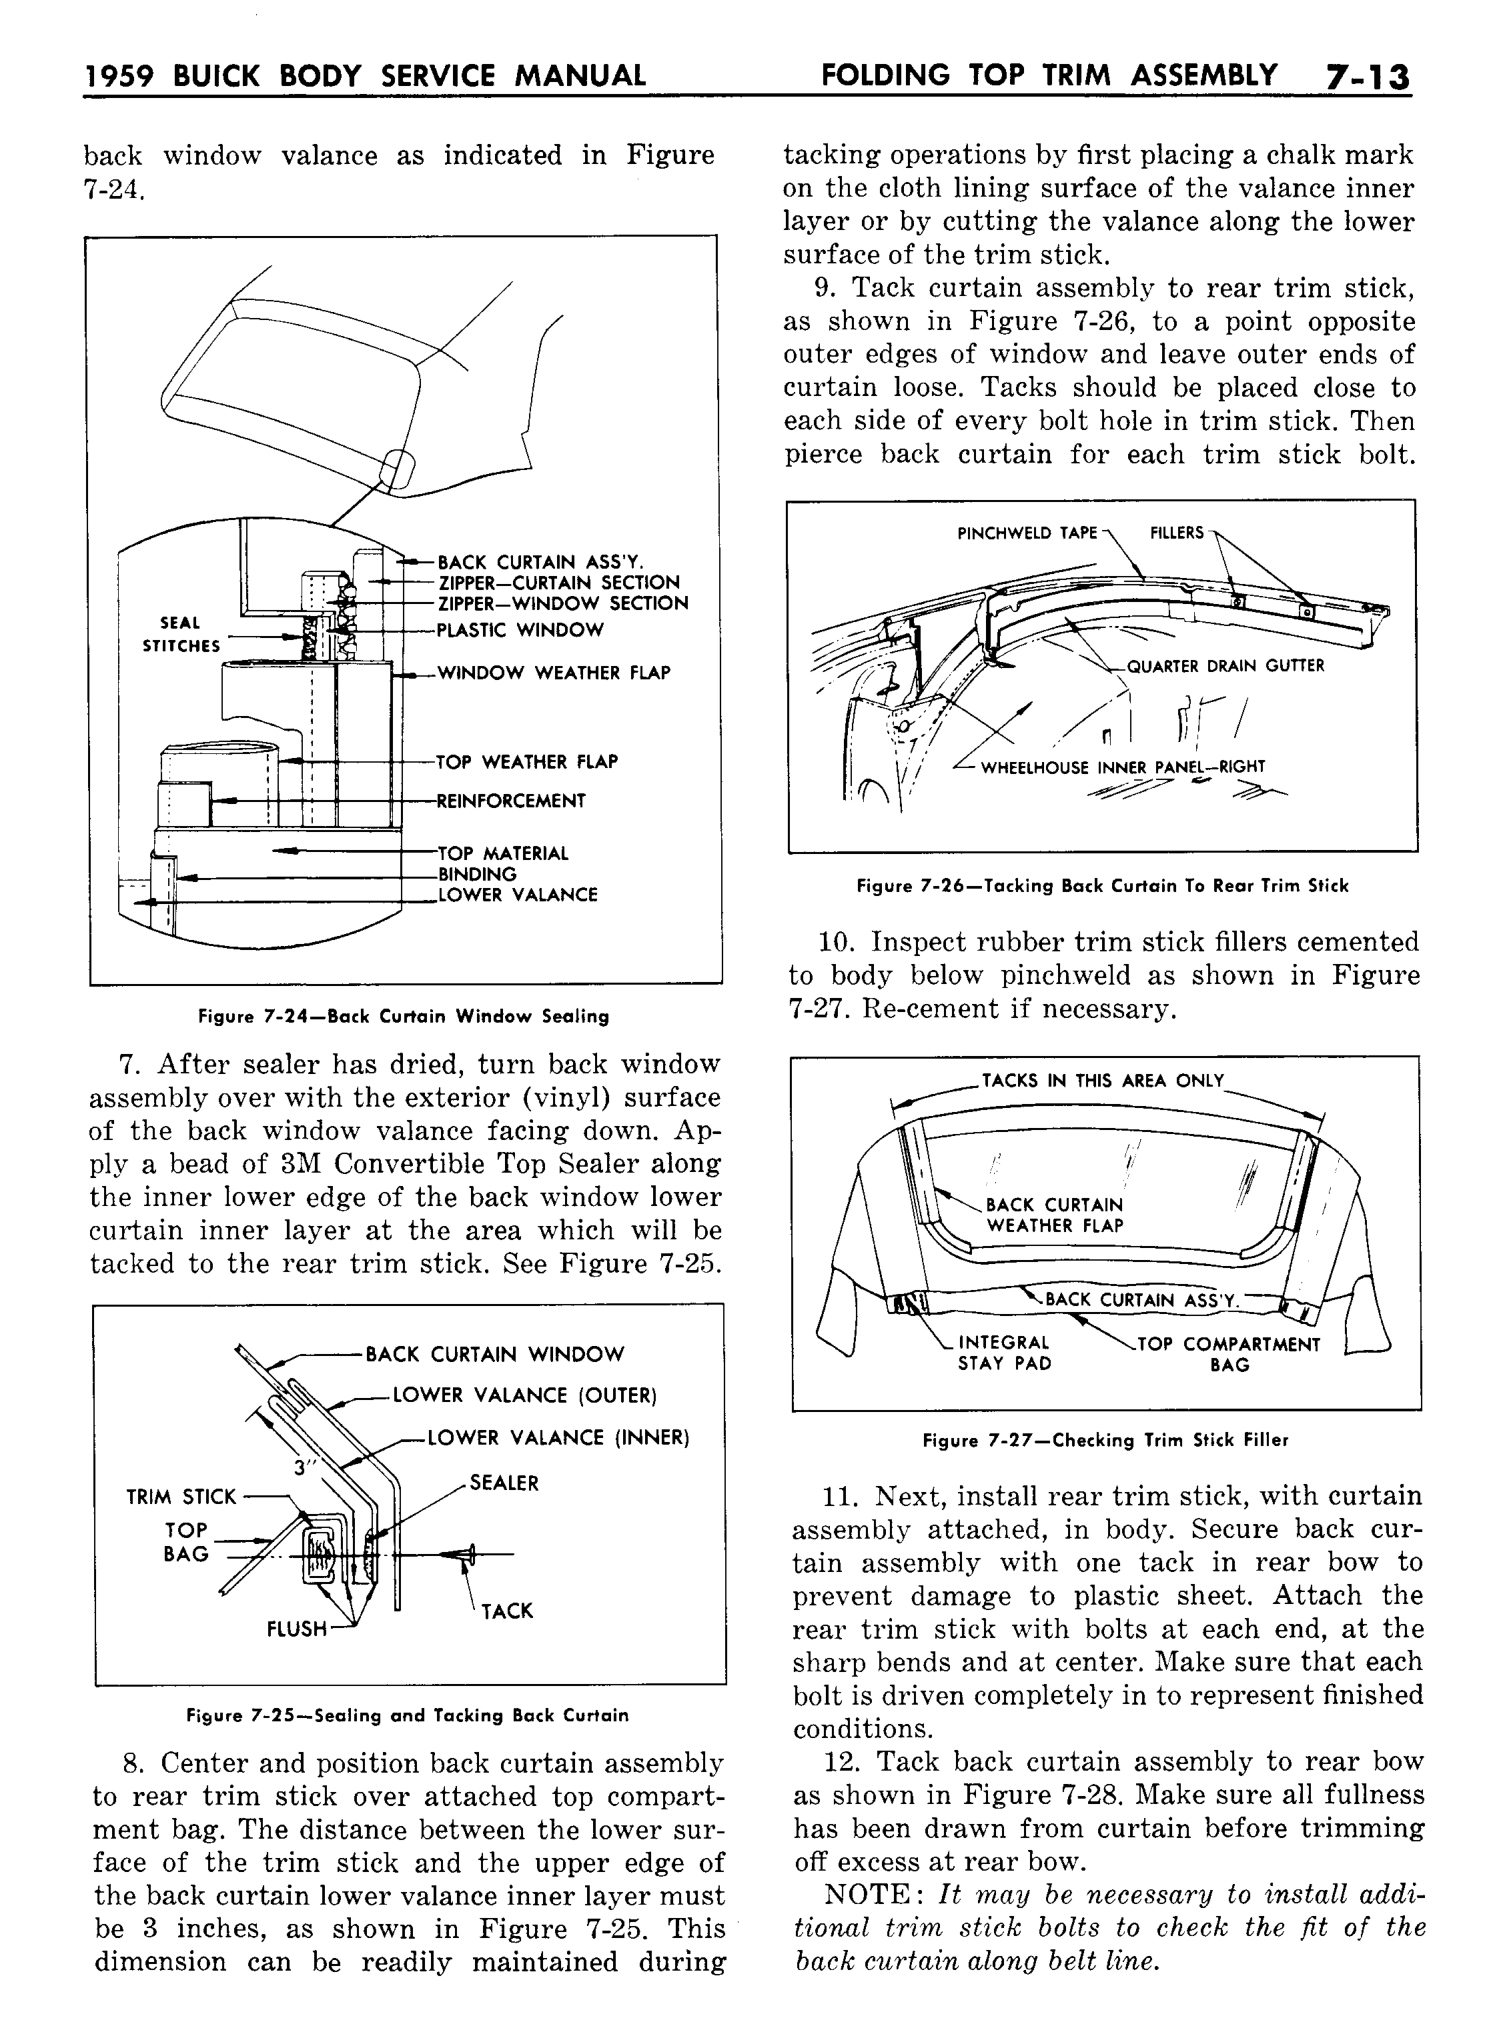 n_08 1959 Buick Body Service-Folding Top_13.jpg